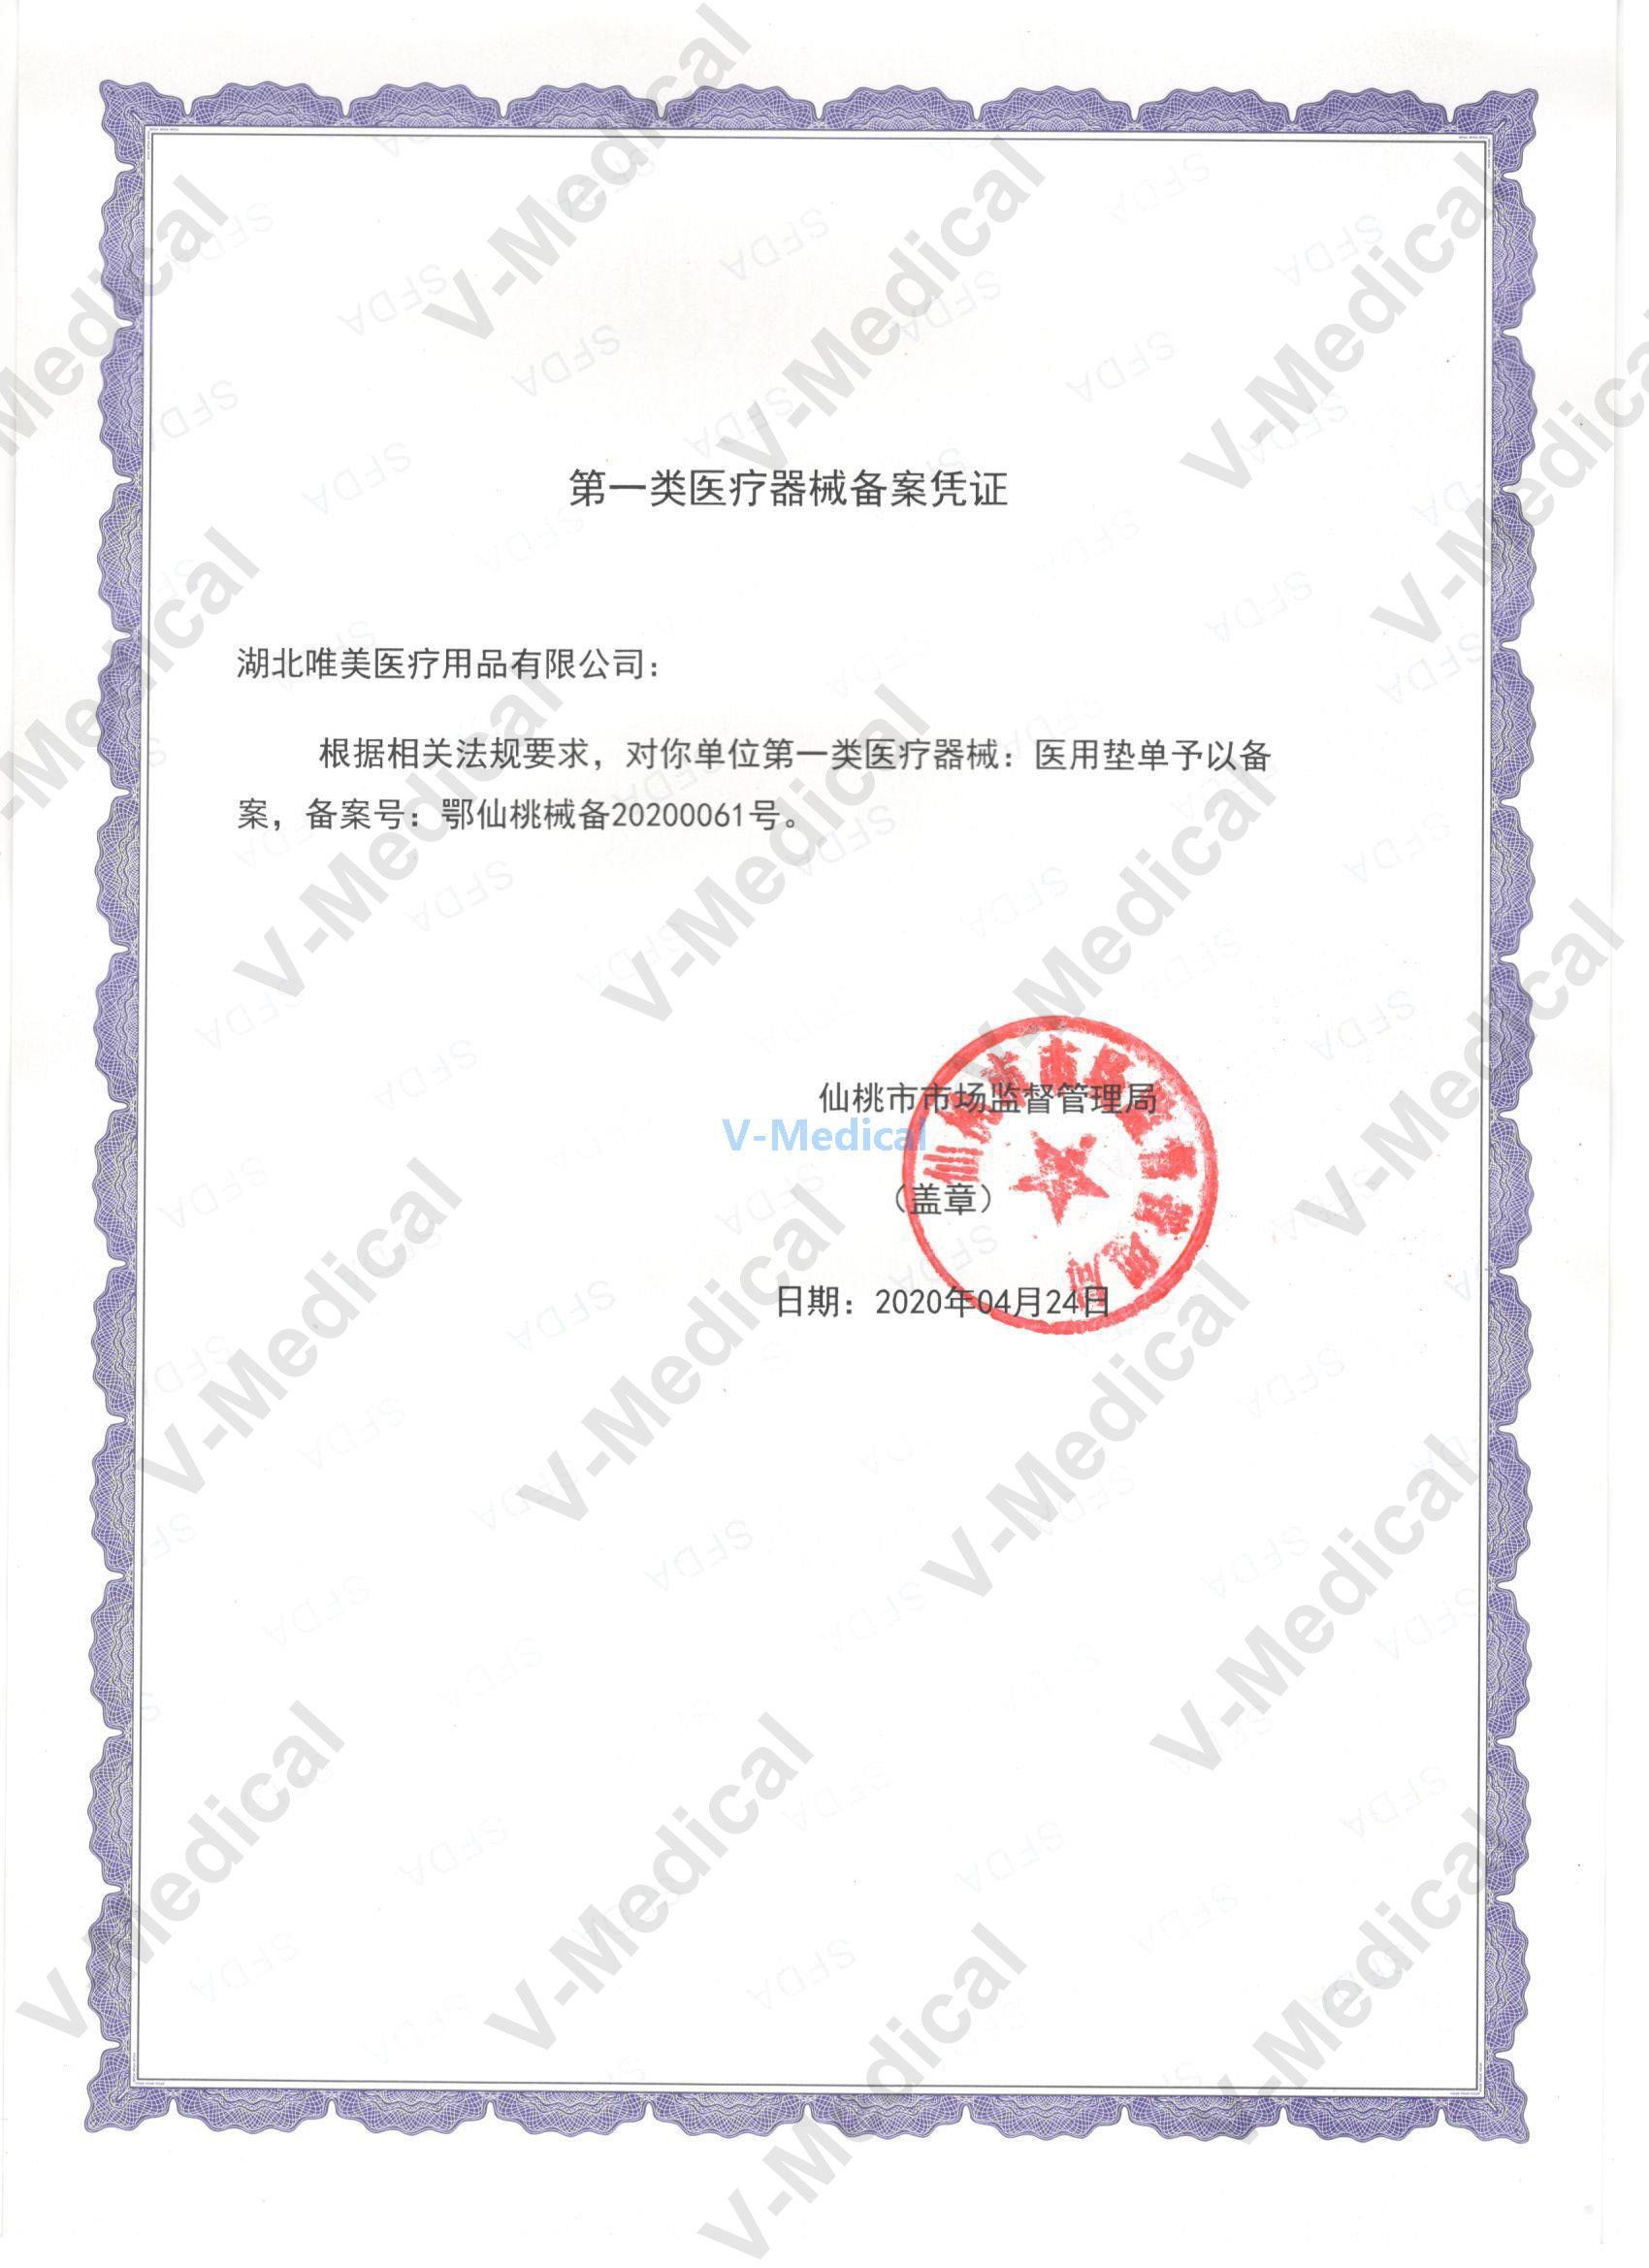 Lease Certificate for Medical Dumpling